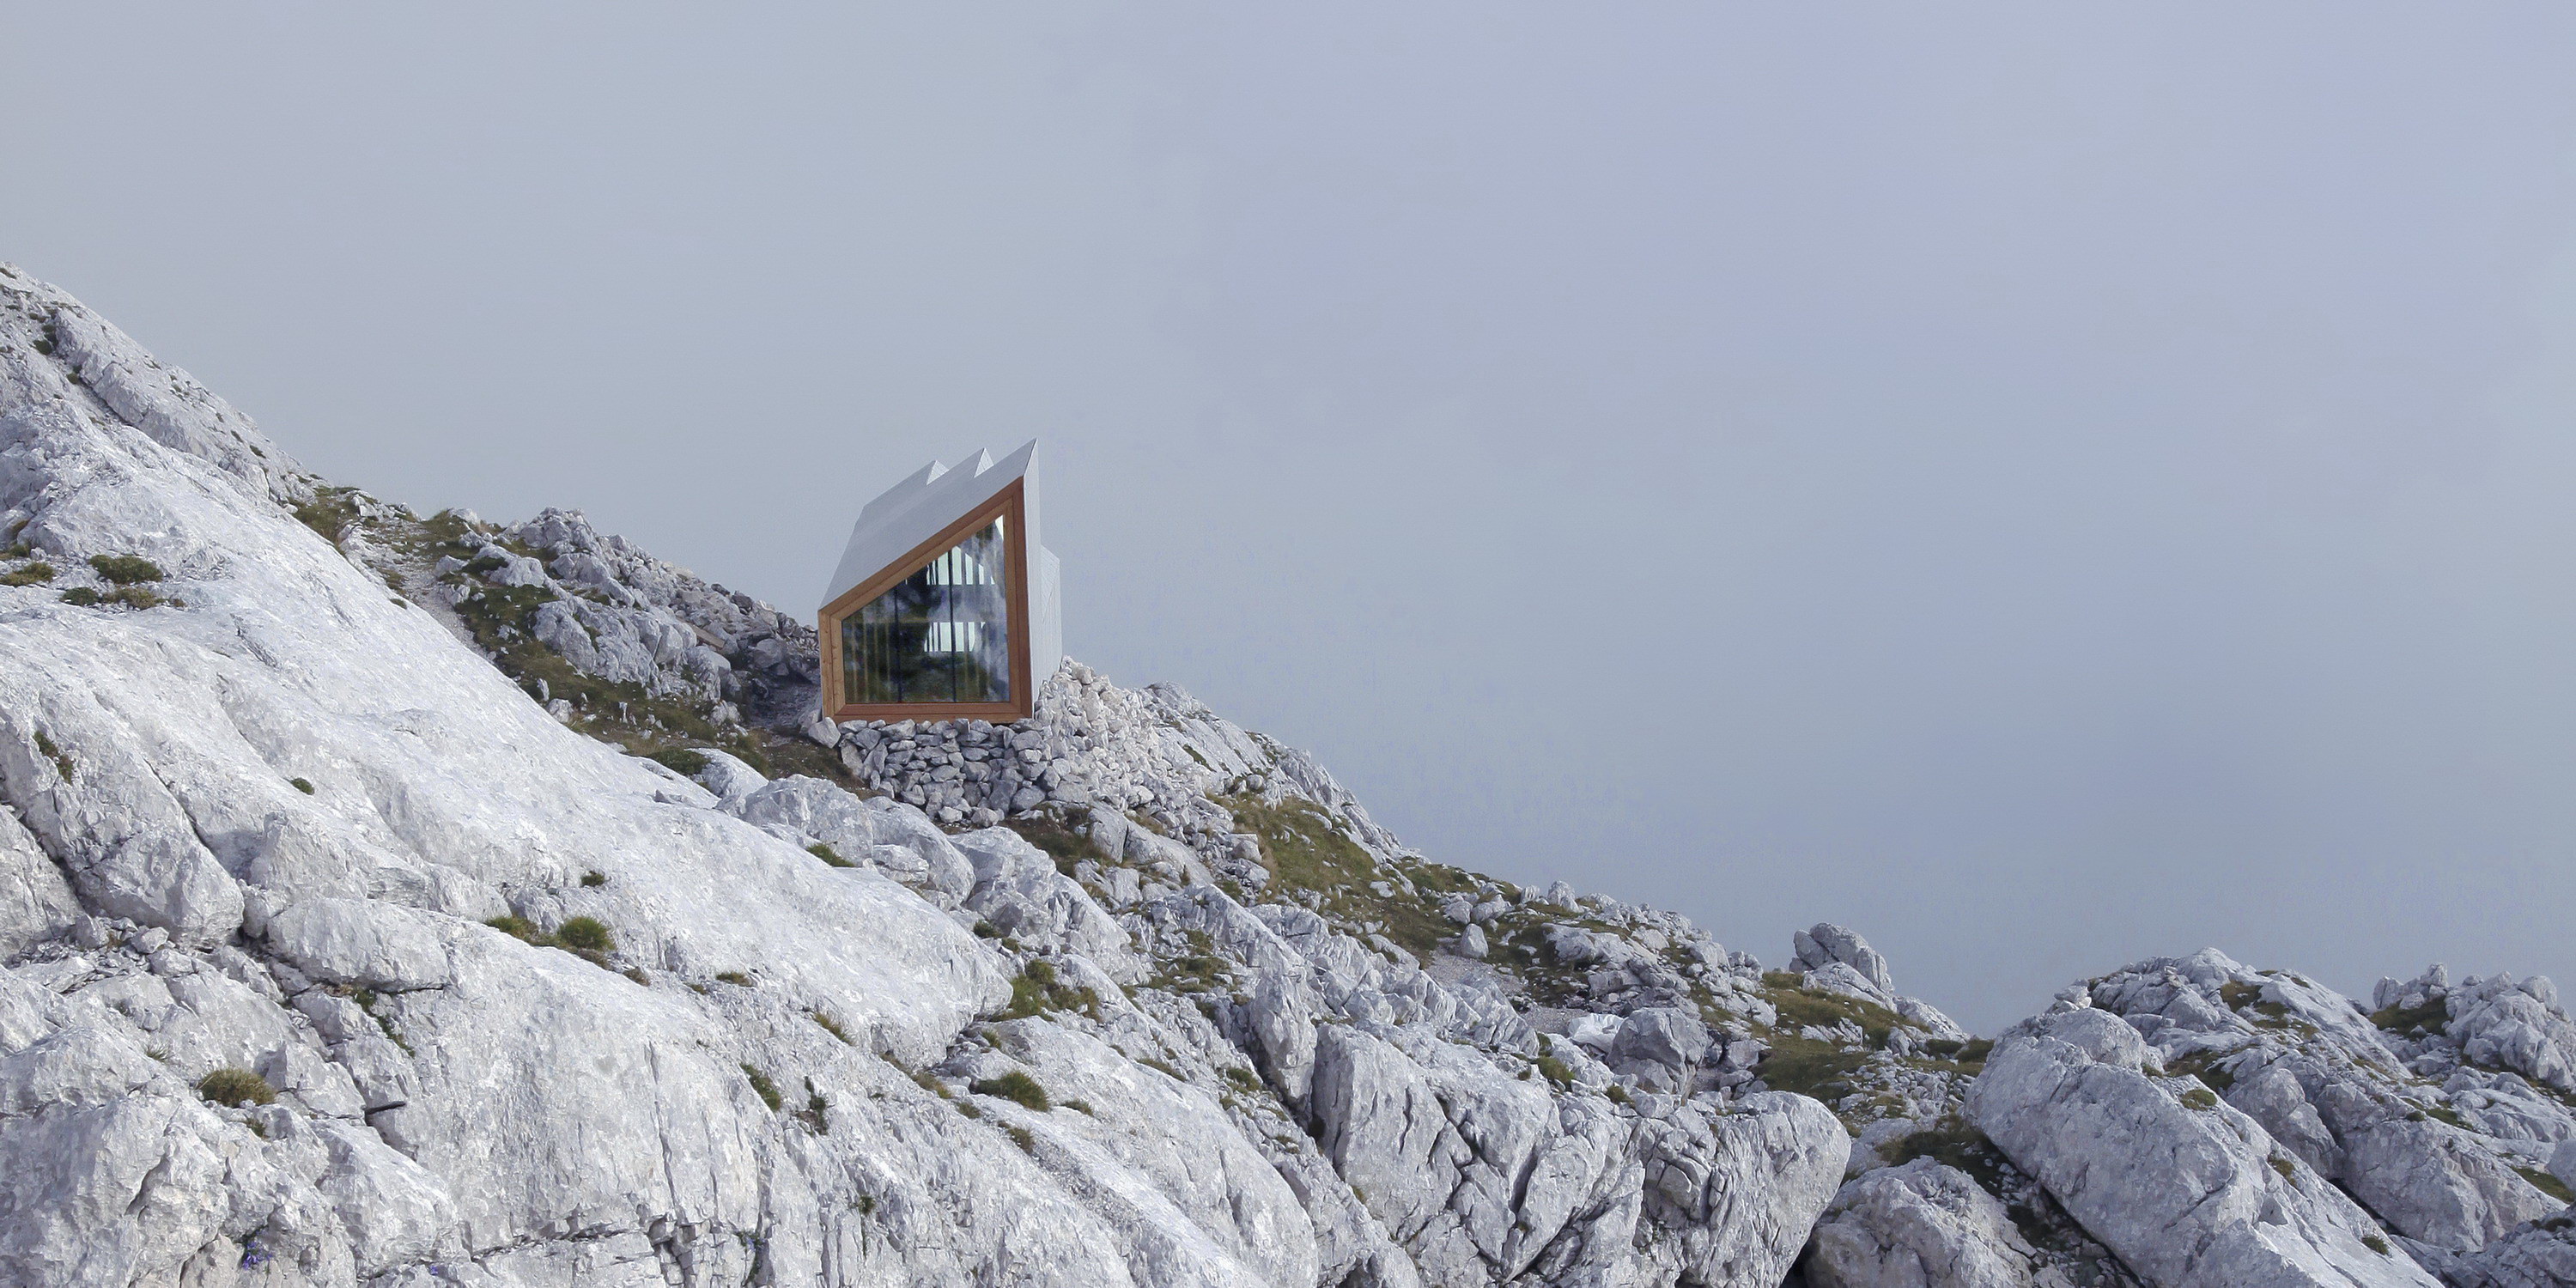 Alpine Shelter Skuta by OFIS Architects, AKT II, and Harvard GSD Students